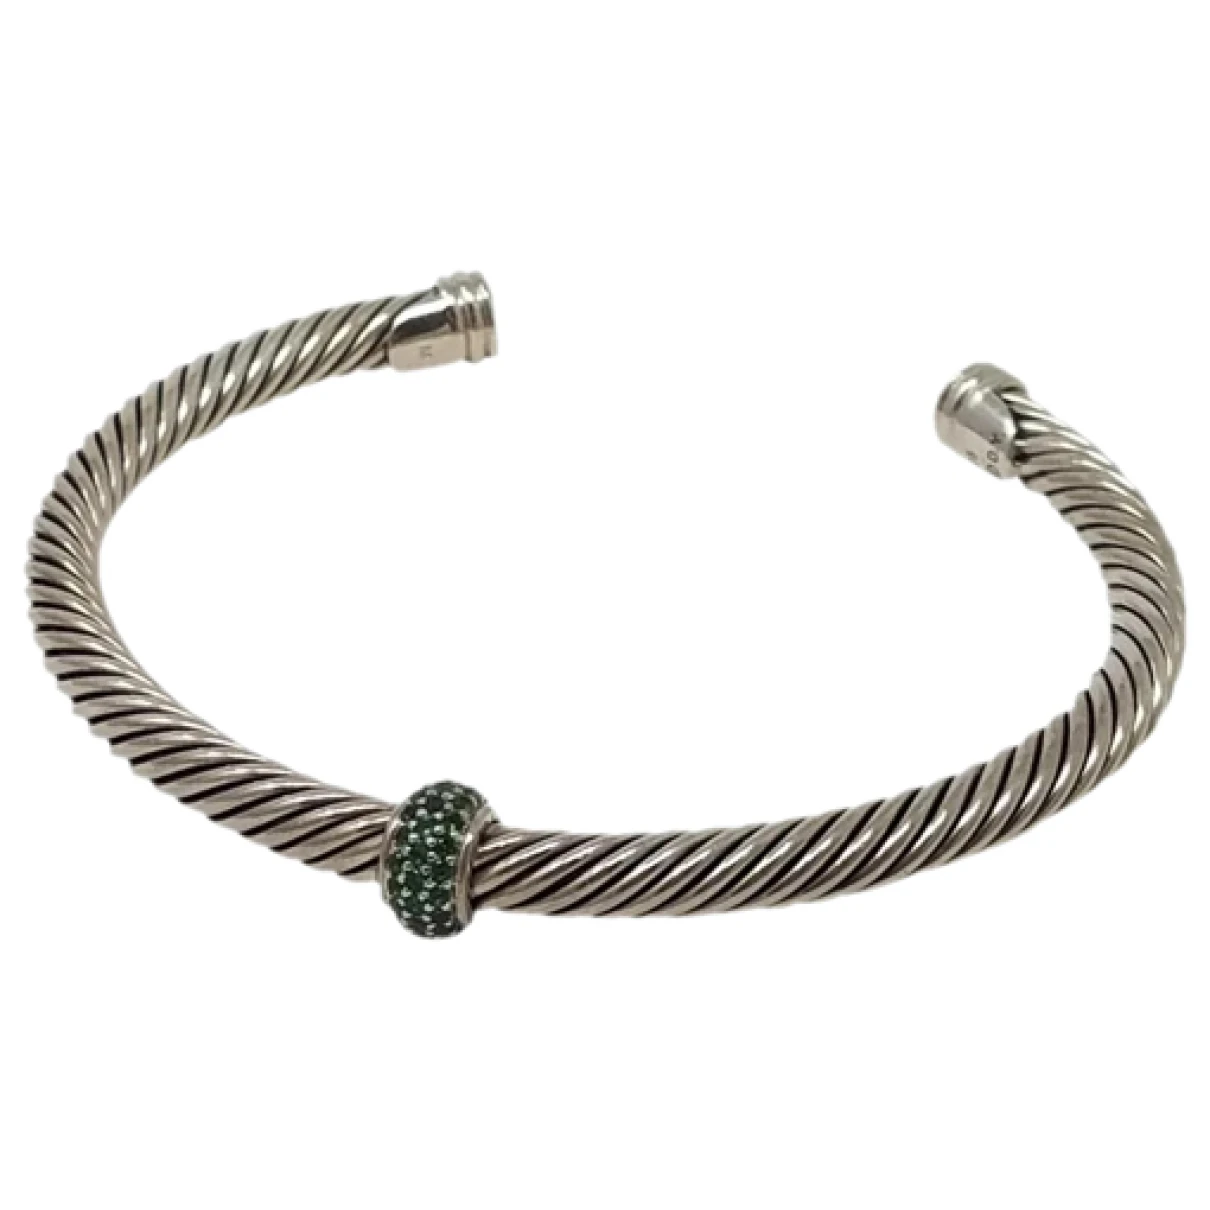 jewellery David Yurman bracelets for Female Silver. Used condition